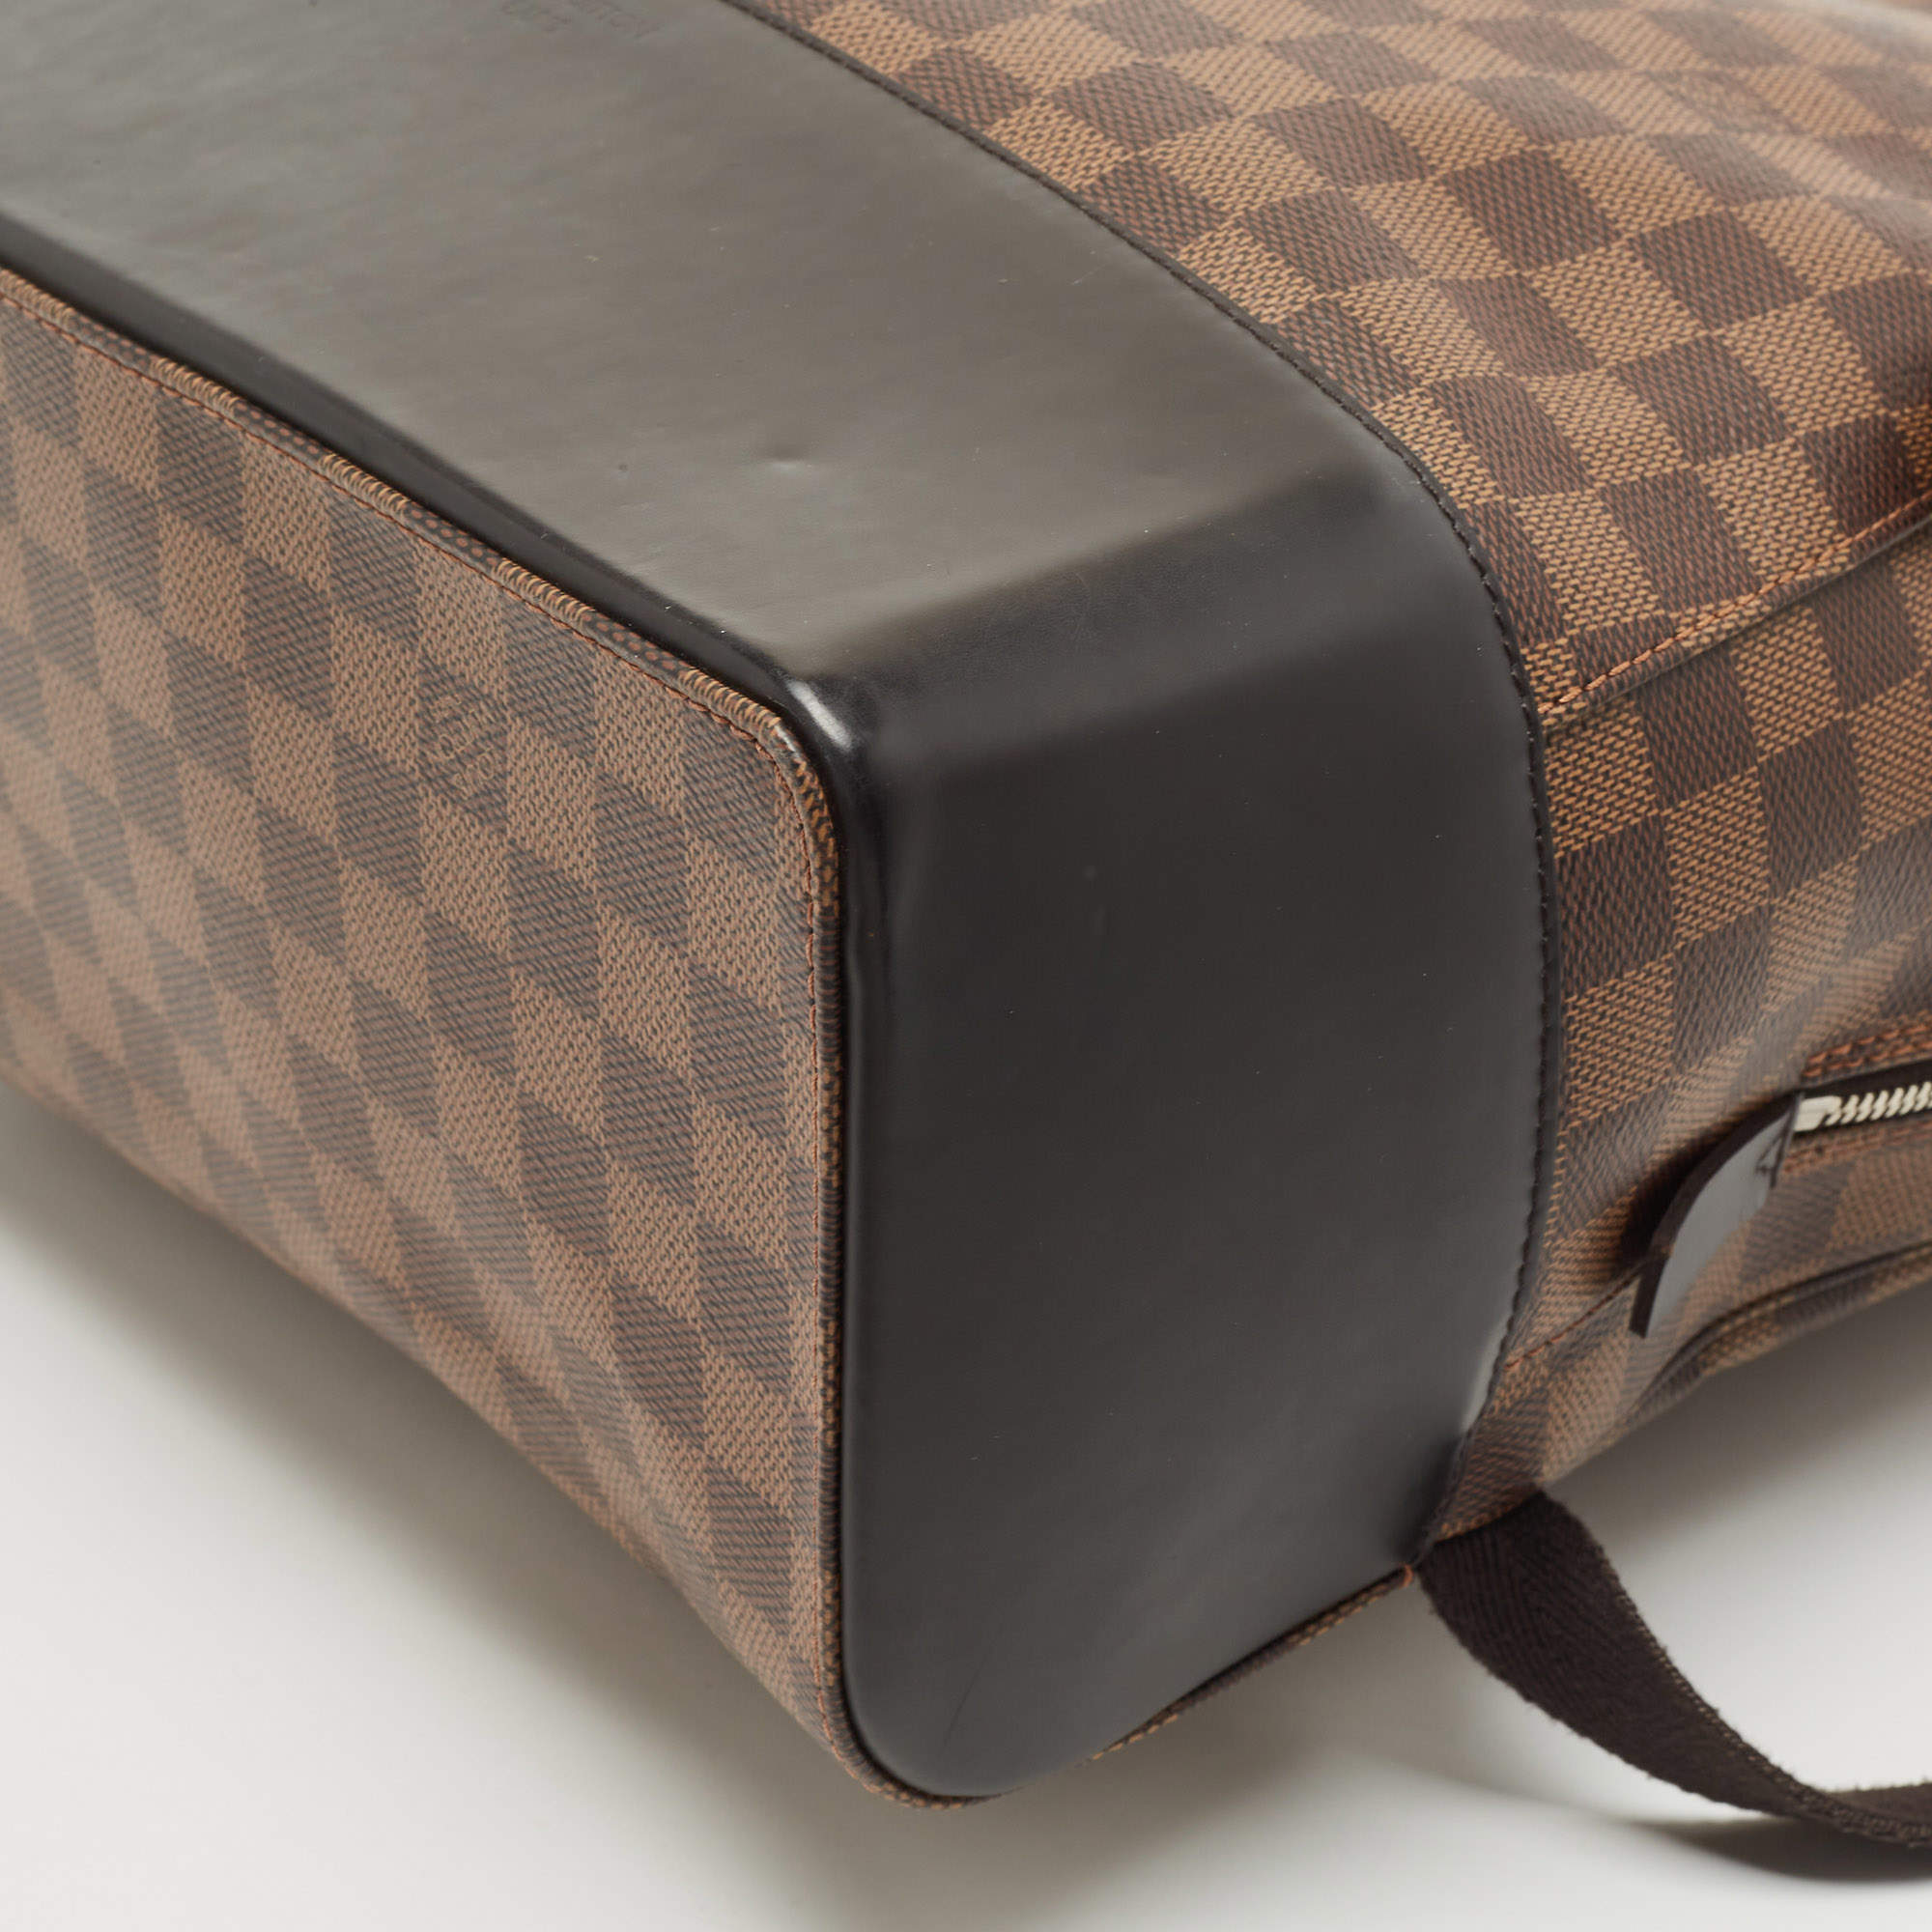 Louis Vuitton Jake Backpack Damier Ebene - Luxury Shopping